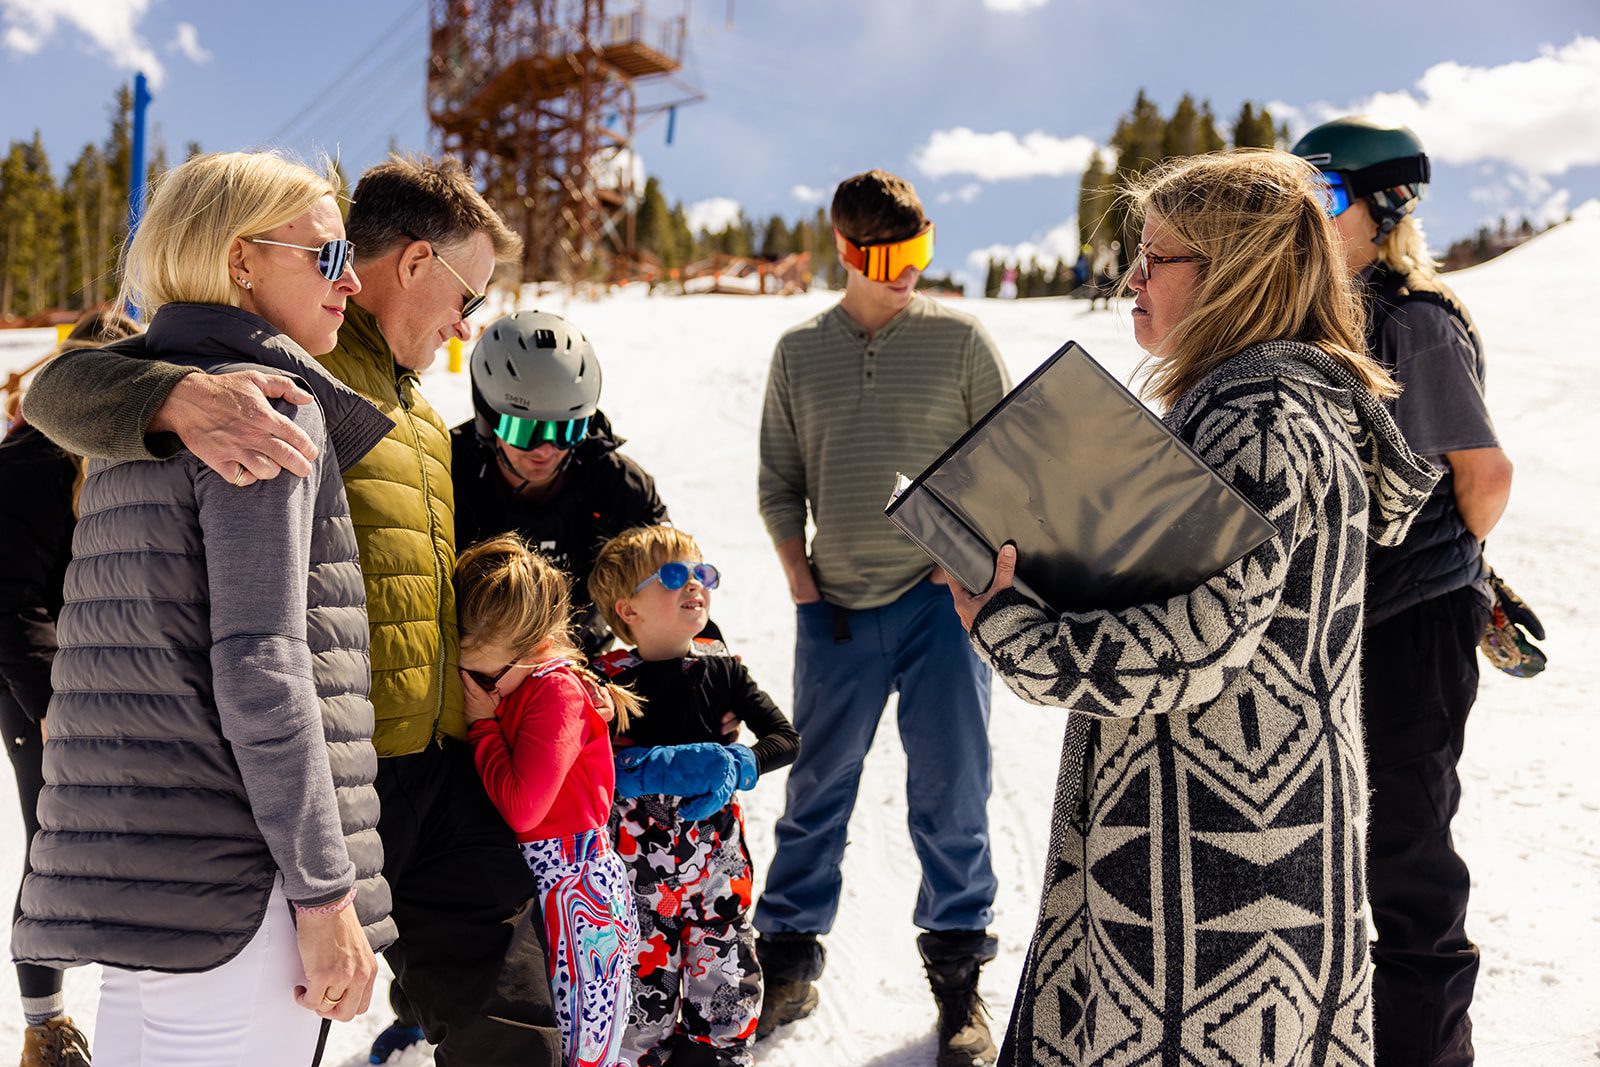 Vow renewal ceremony at Breckenridge Ski resort.